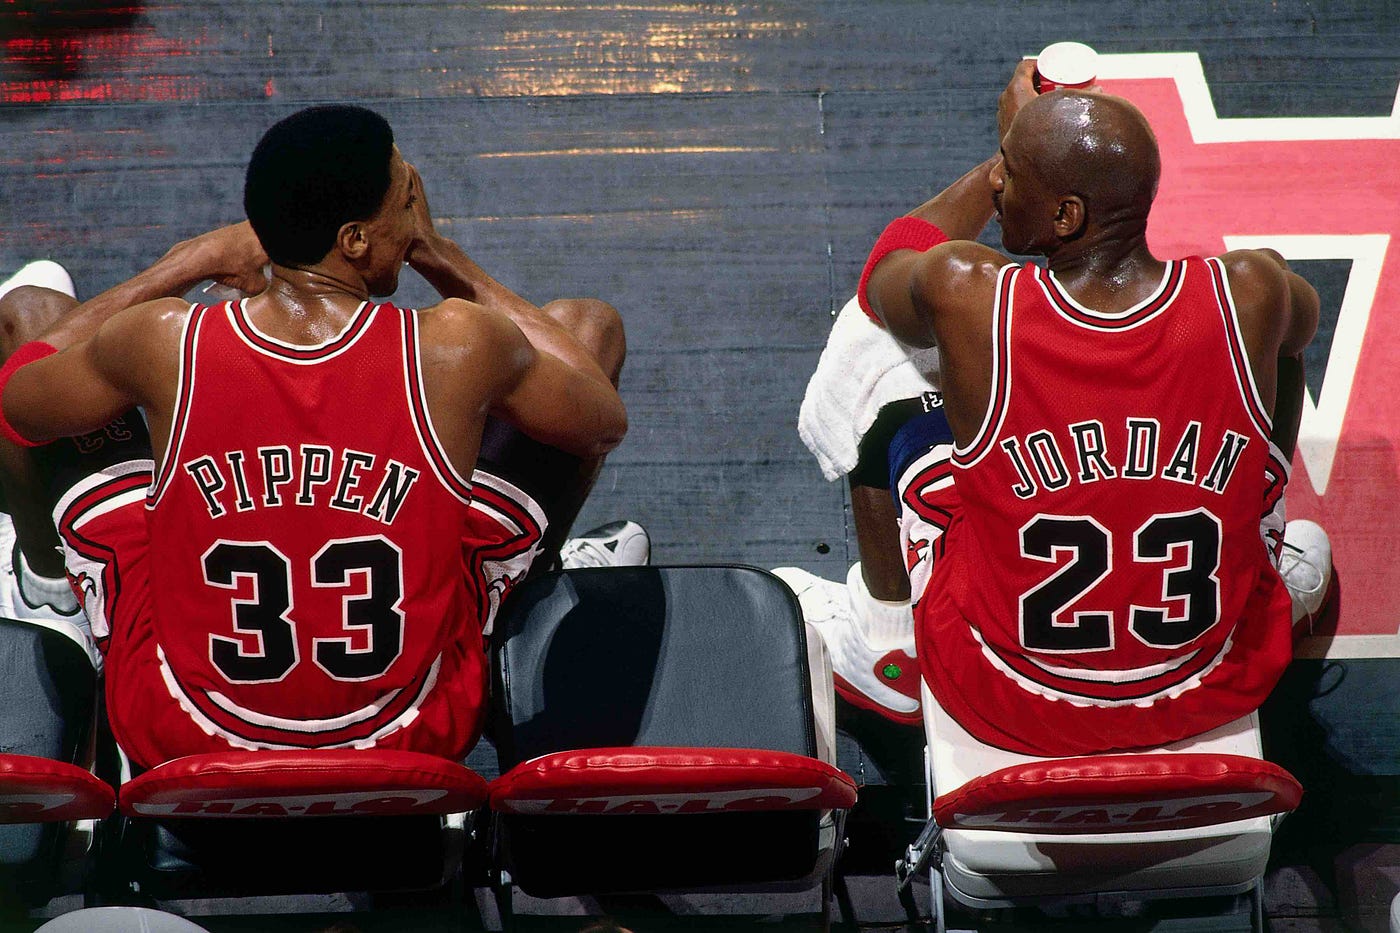 Karl Malone makes $5 million off Michael Jordan jersey, Dream Team